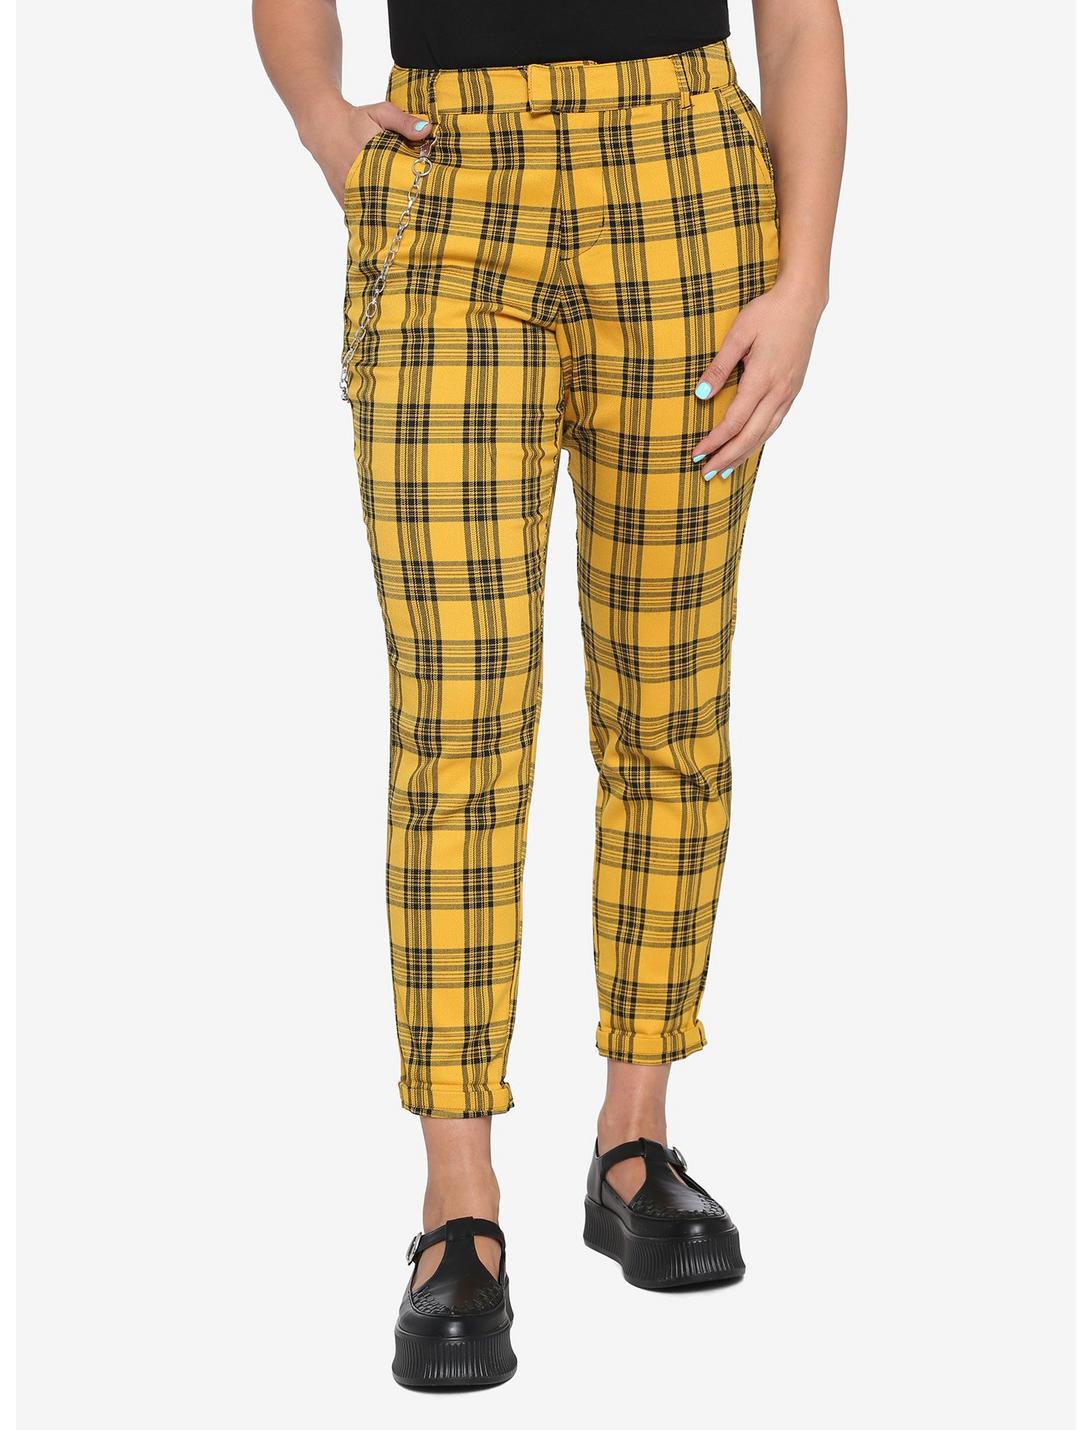 Yellow Plaid Pants With Detachable Chain, PLAID - YELLOW, hi-res